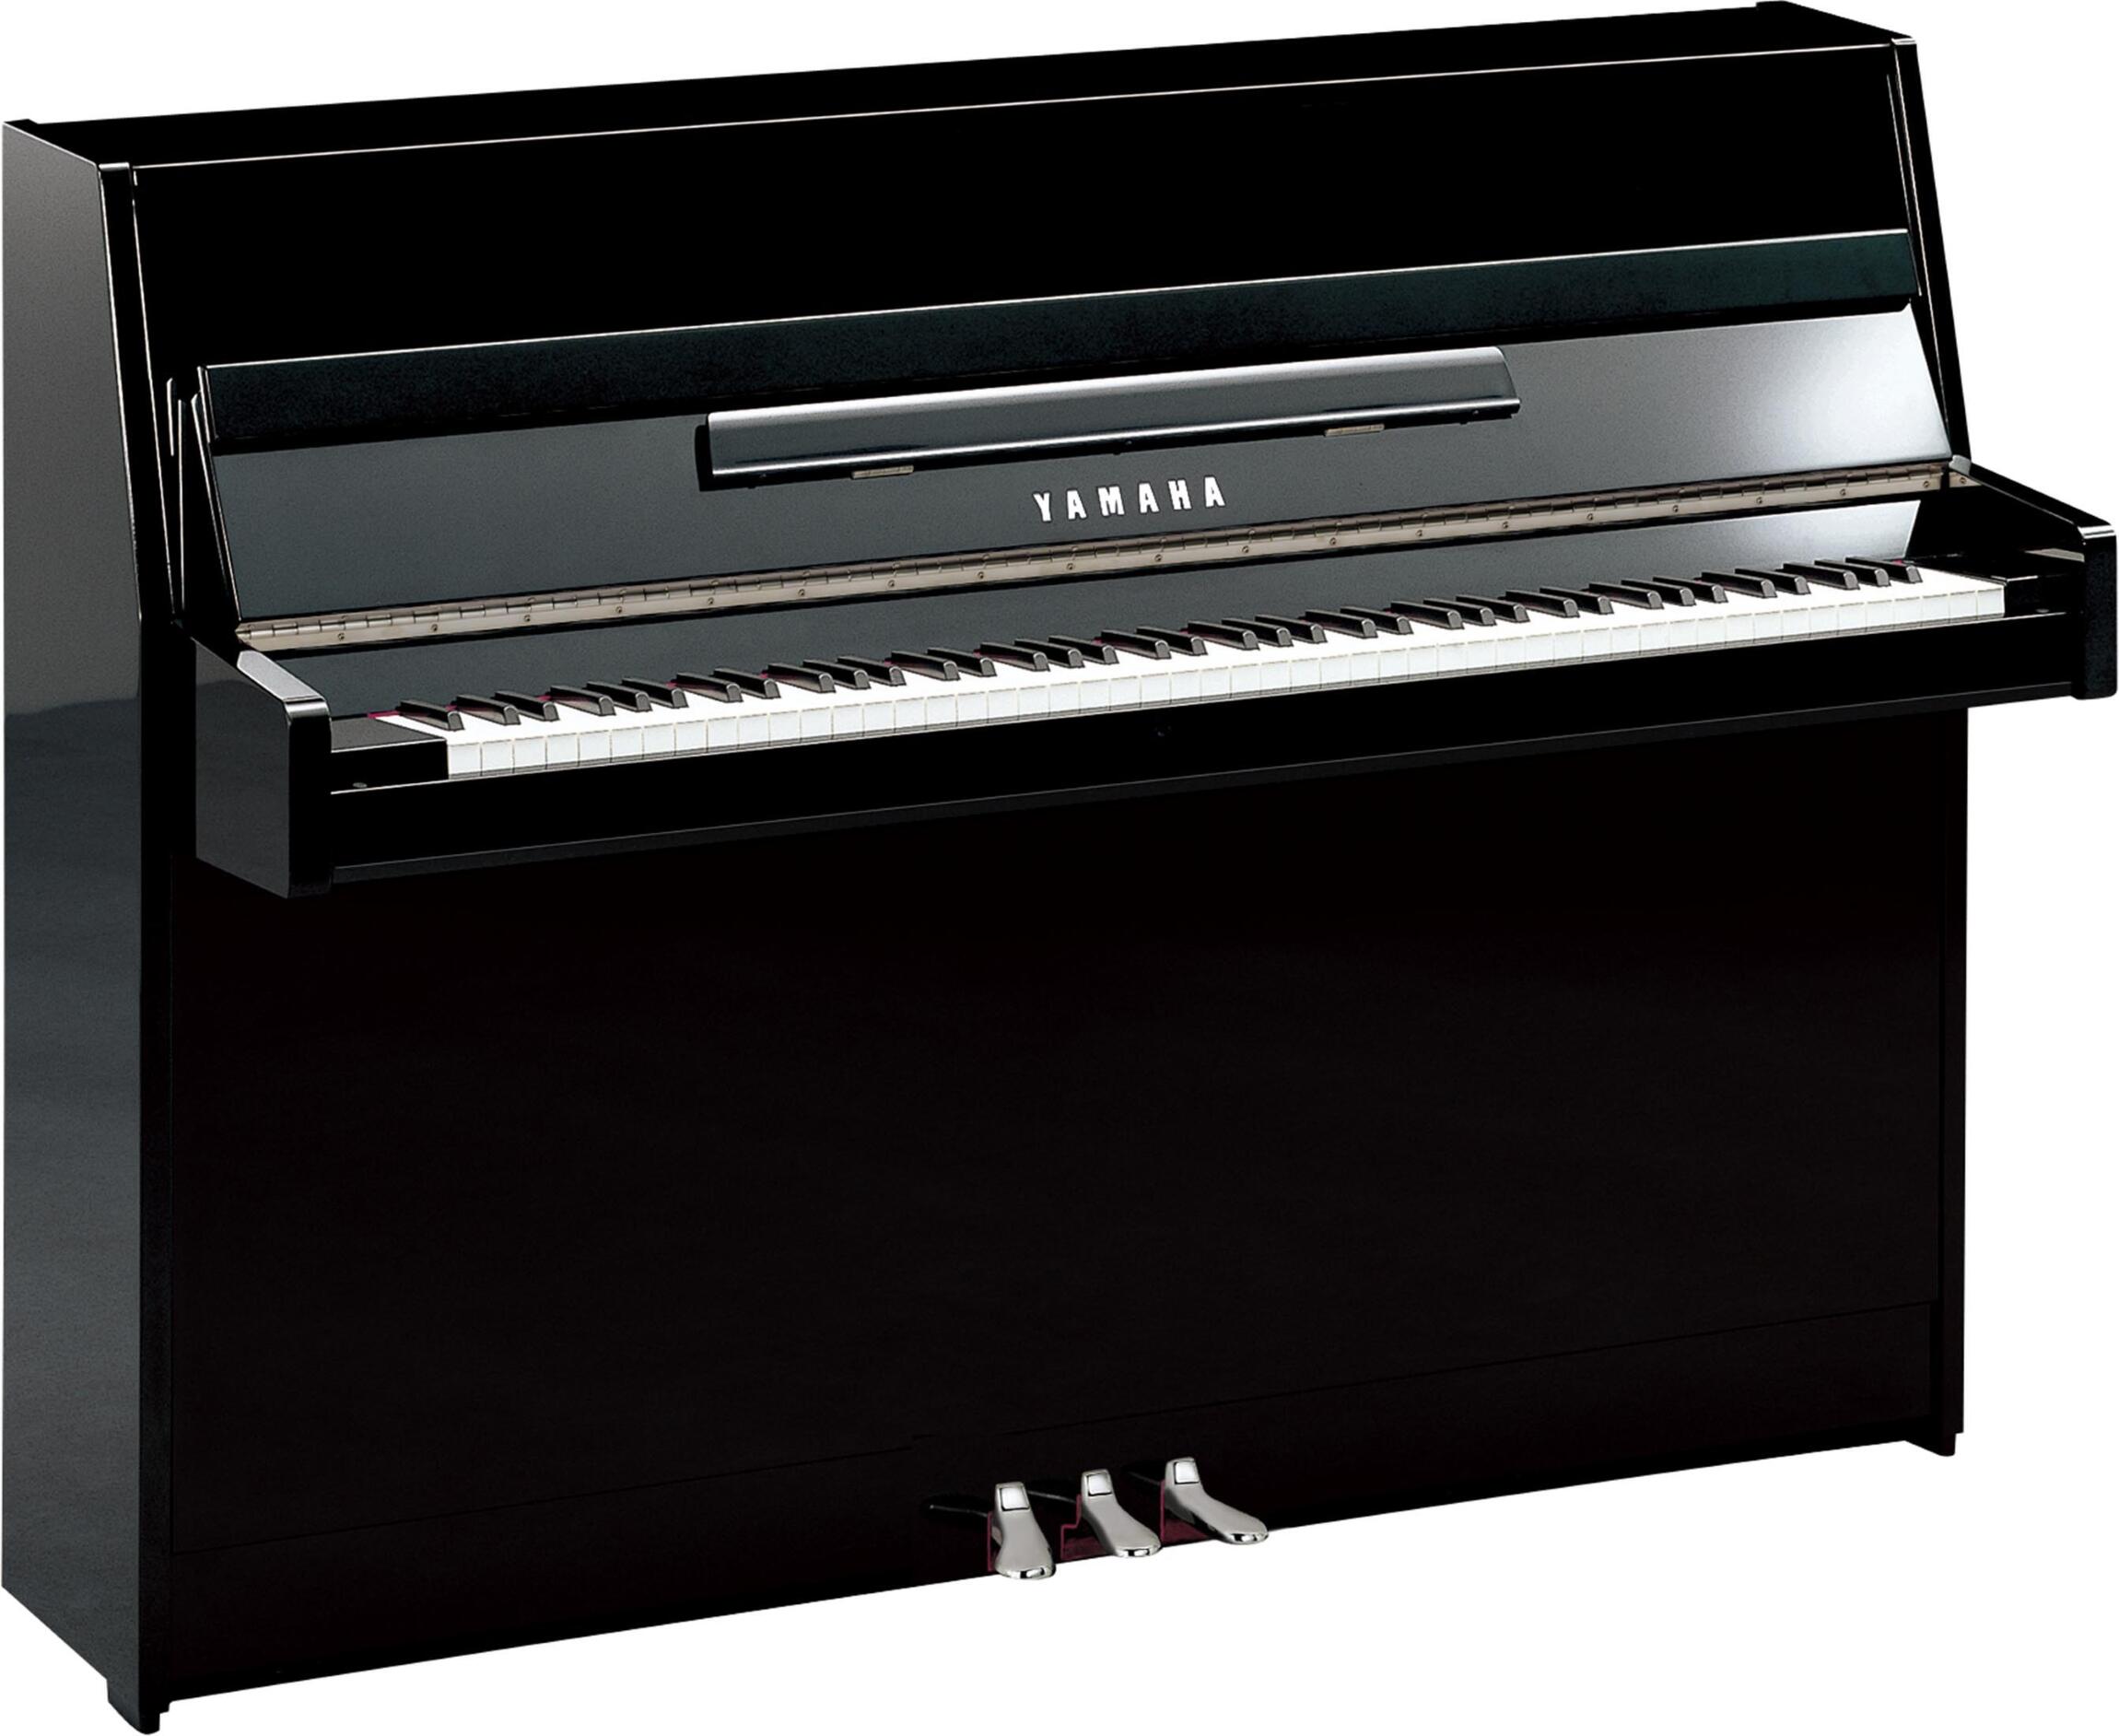 Yamaha Pianos Acoustic B1 PEC Noir poli-brillant Chrome 109 cm : photo 1